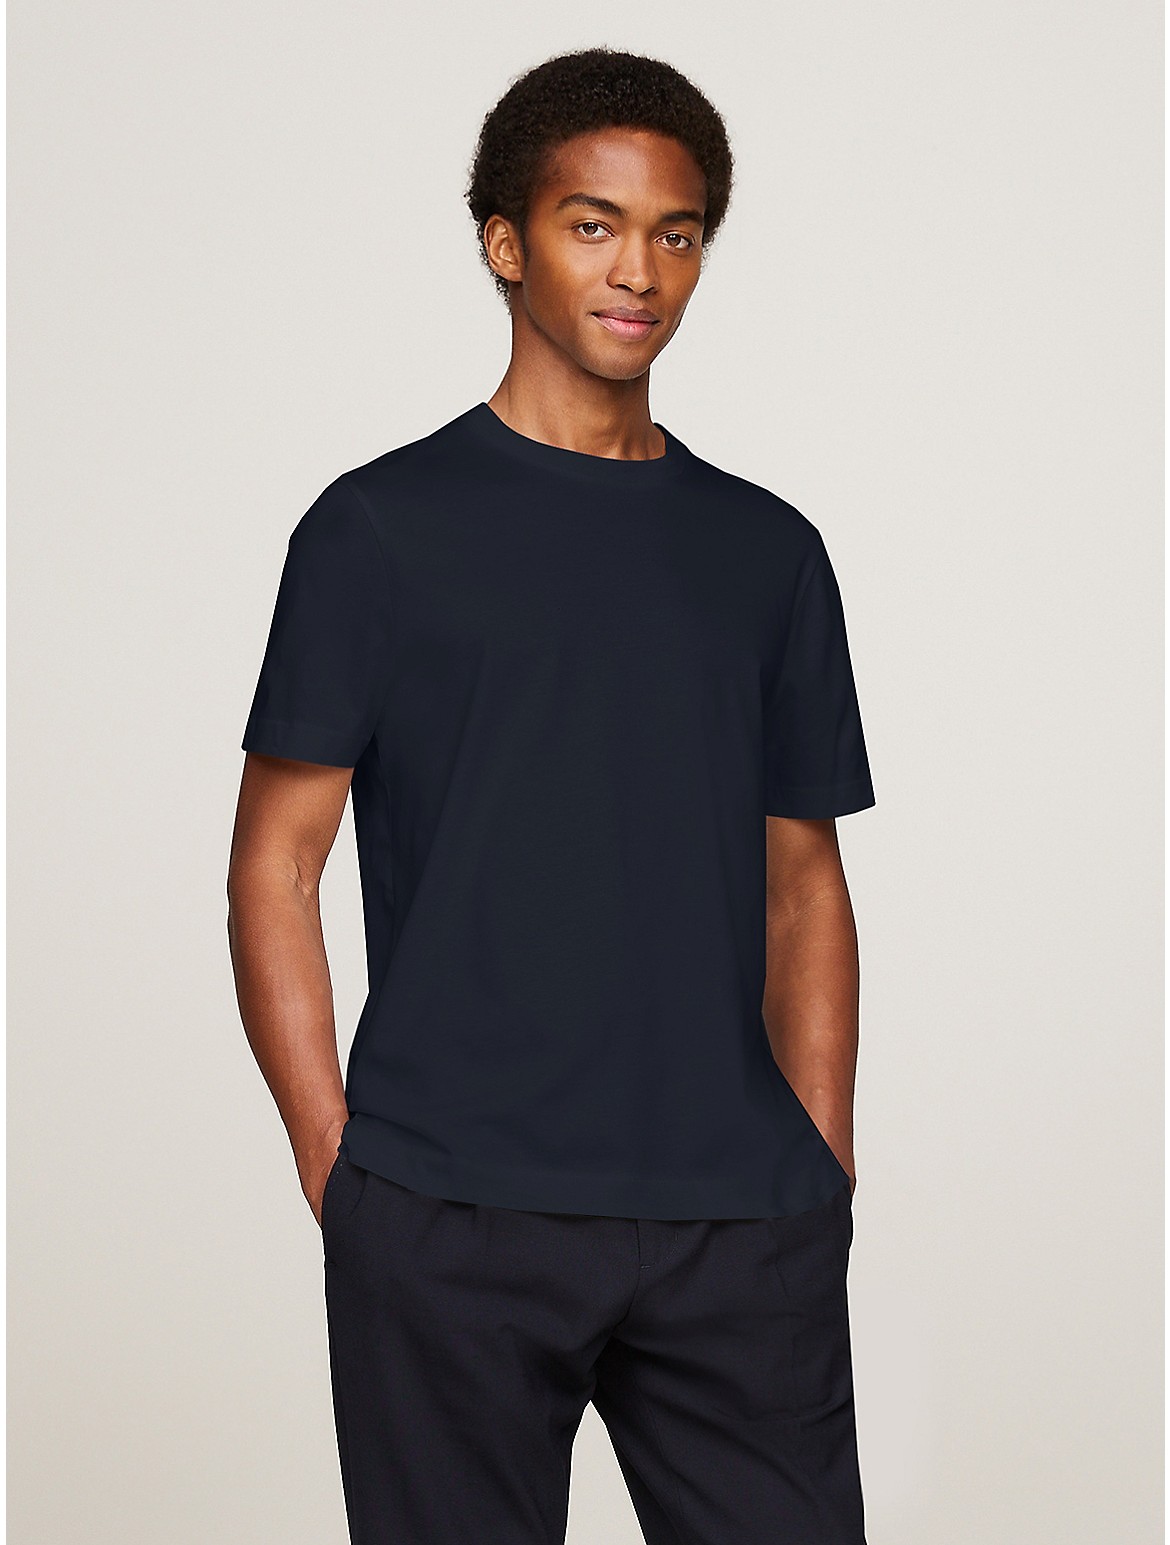 Tommy Hilfiger Men's Solid Mercerized Cotton T-Shirt